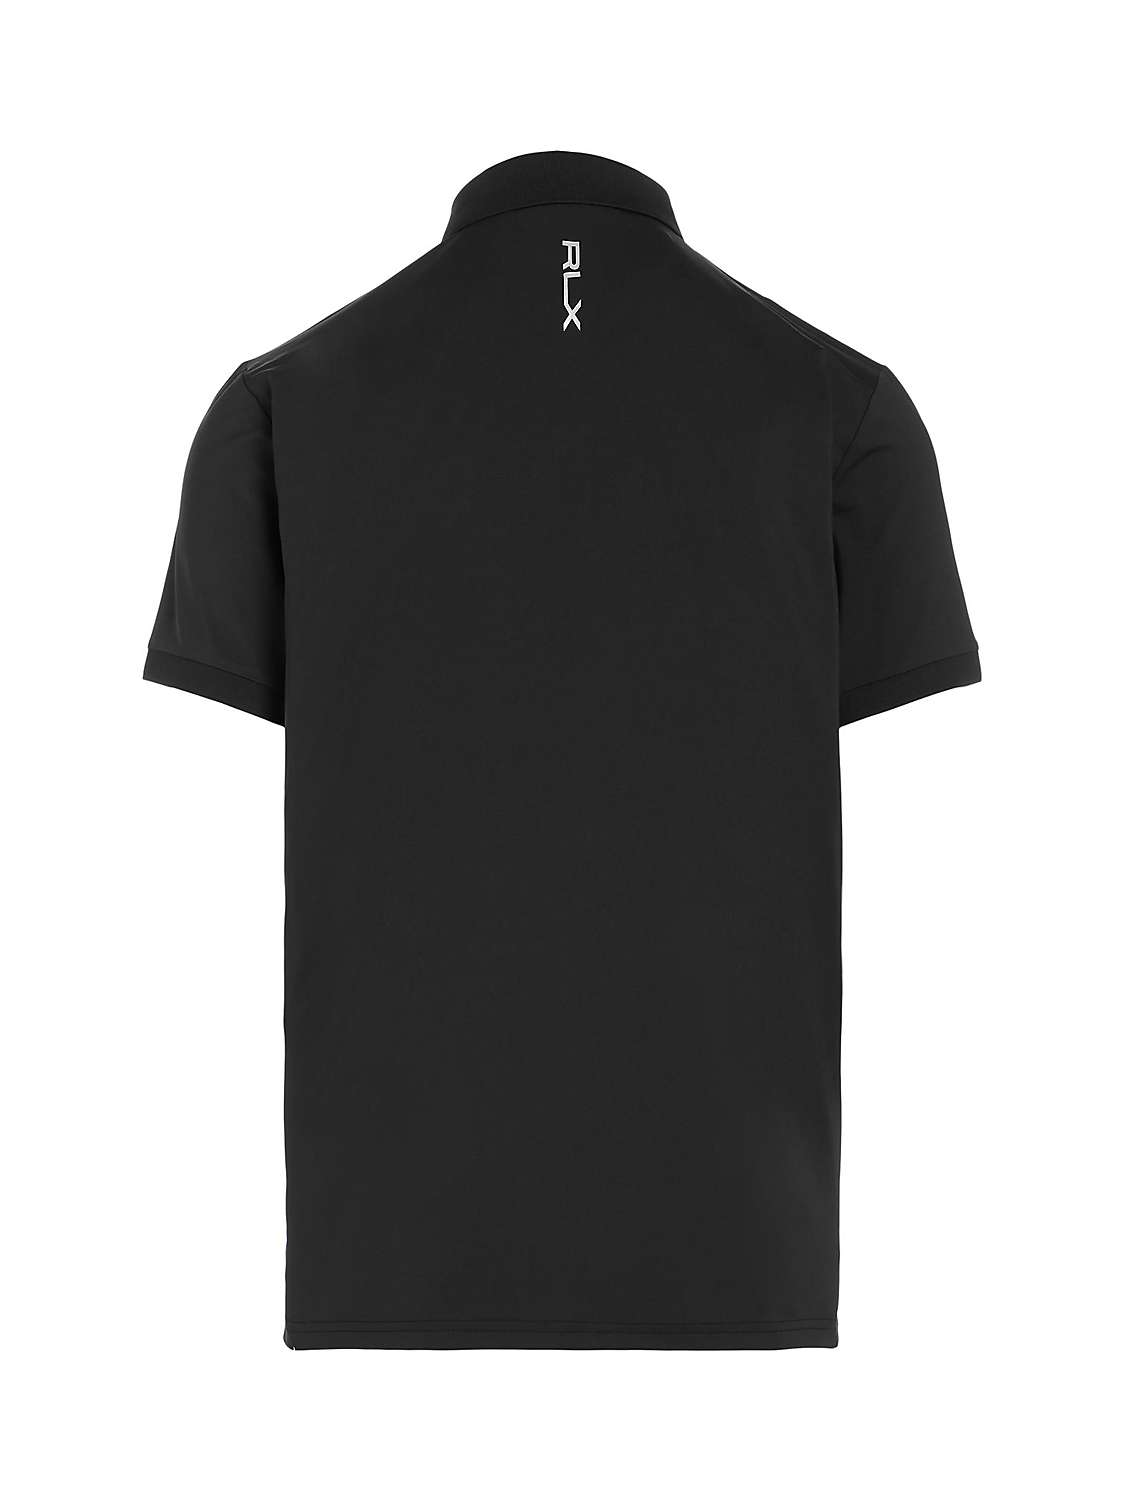 Polo Golf by Ralph Lauren RLX Polo Shirt, Black at John Lewis & Partners